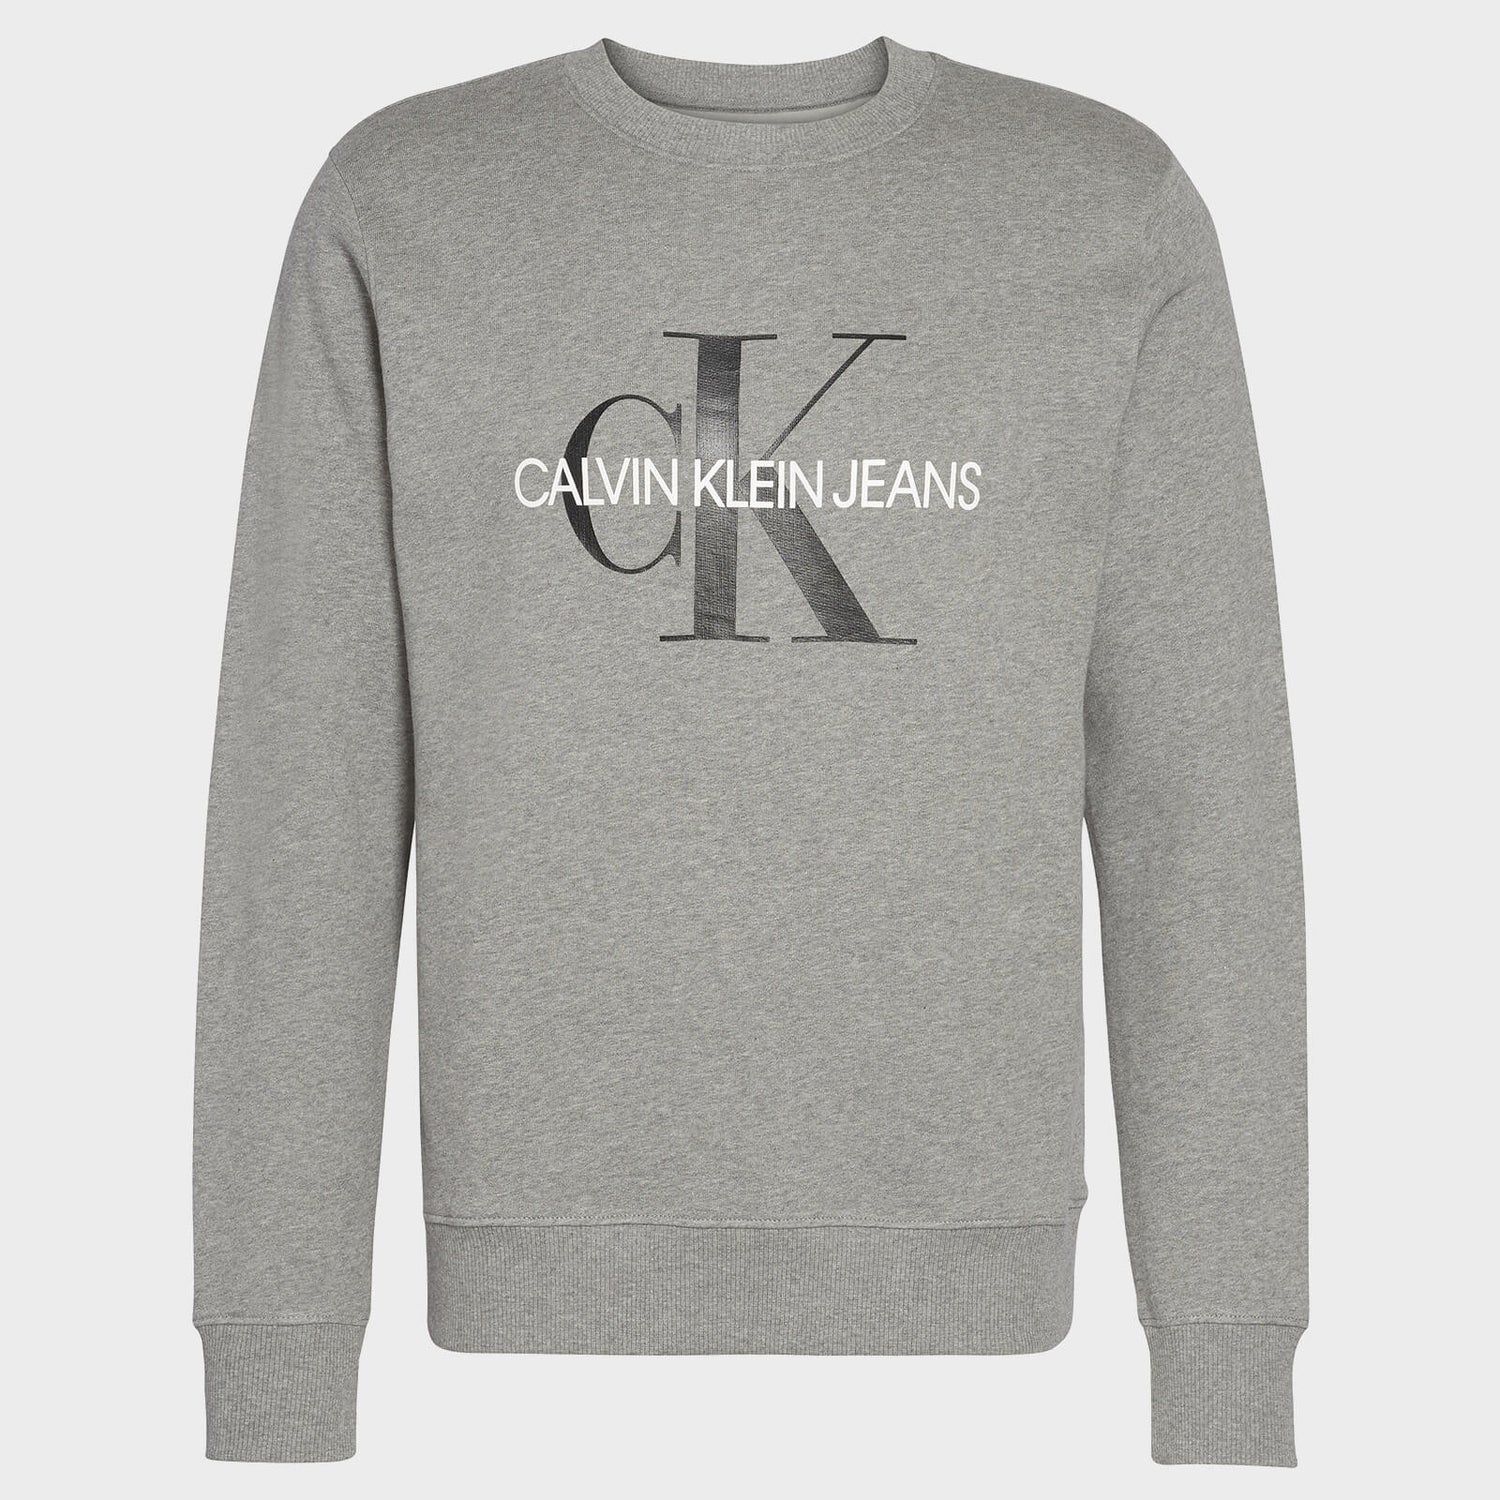 Calvin Klein Jeans Men's Iconic Monogram Sweatshirt - Mid Grey Heather